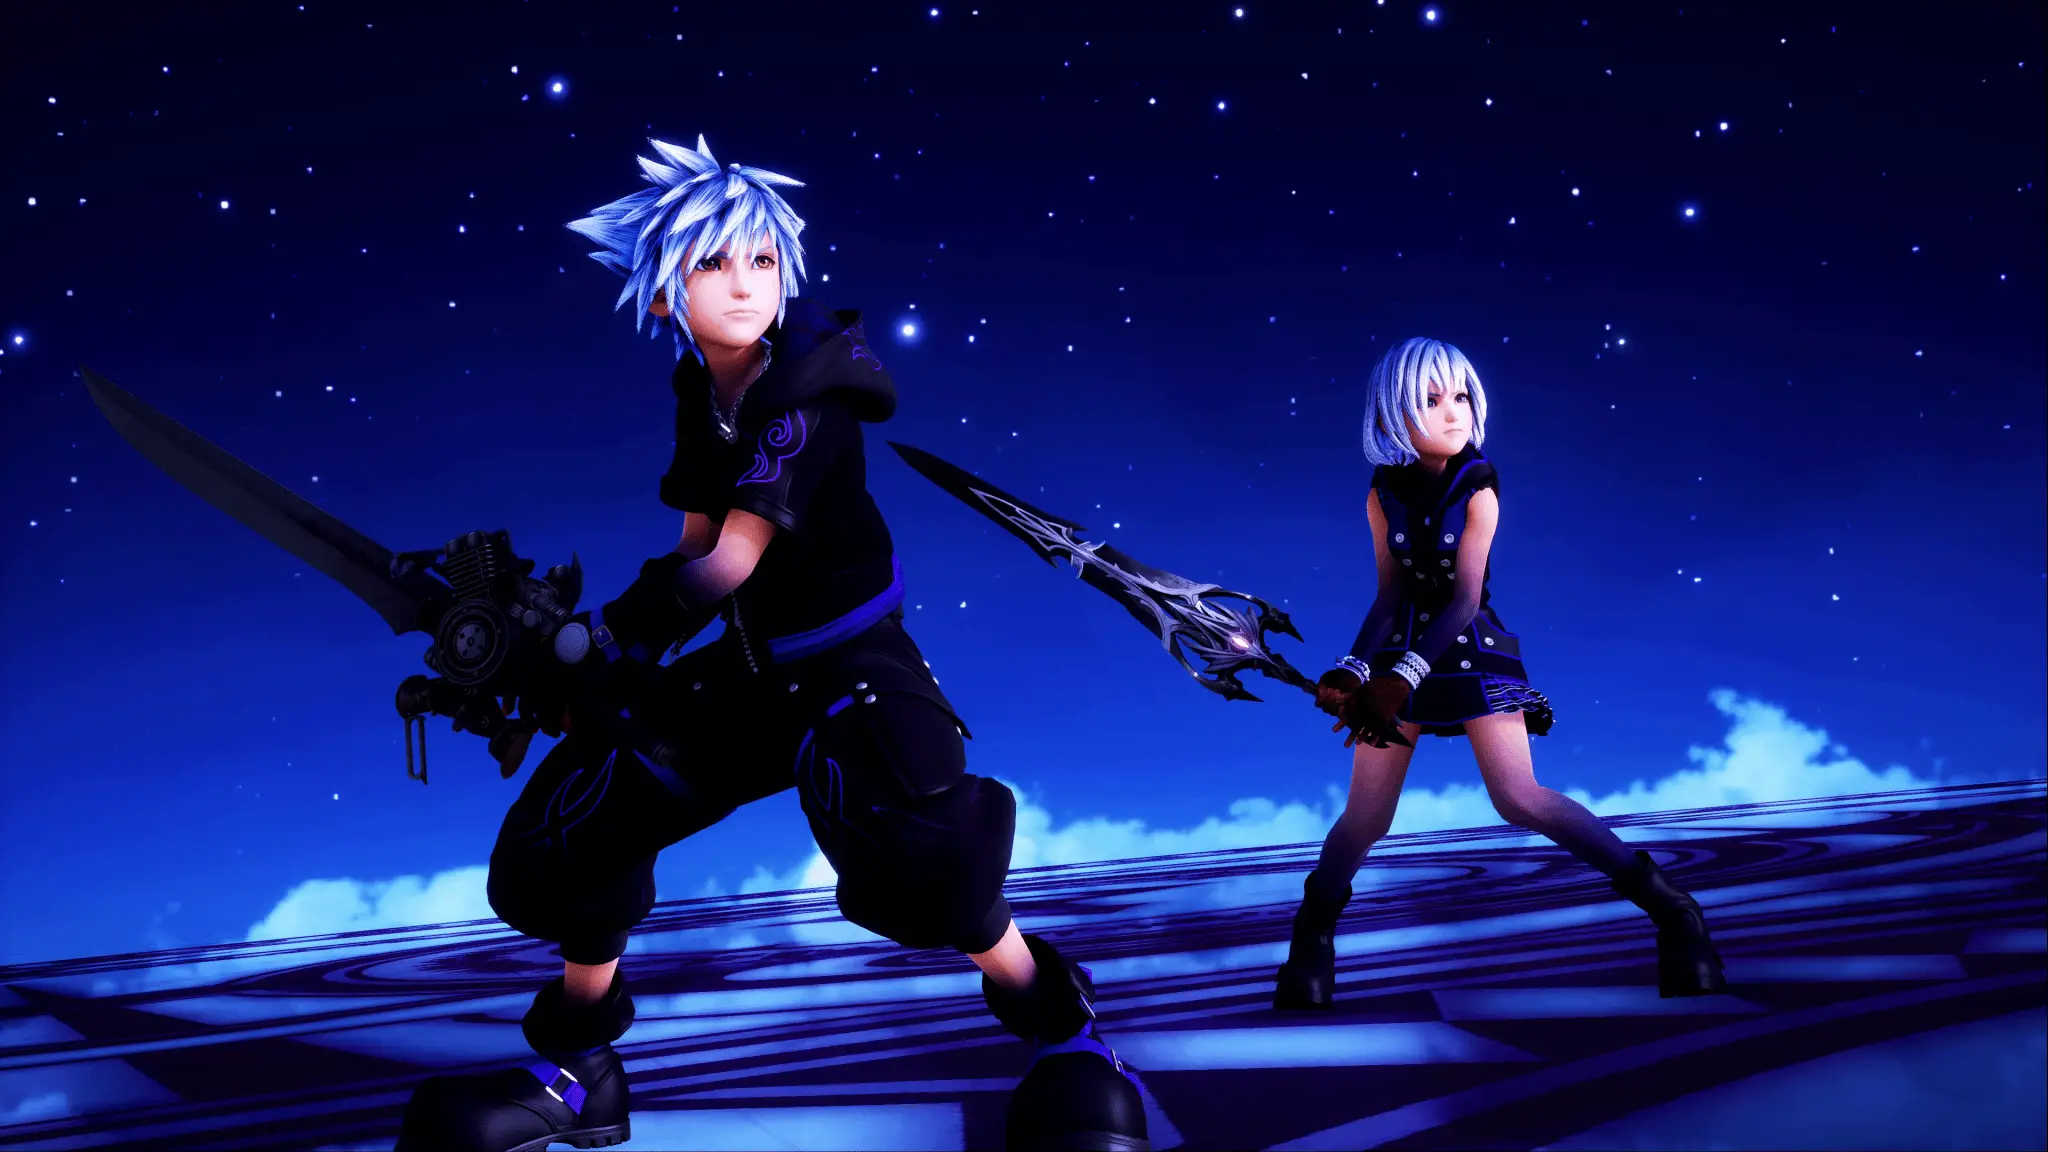 Proficient Kingdom Hearts III Project Darkling Mod Adds Final Fantasy Weaponry